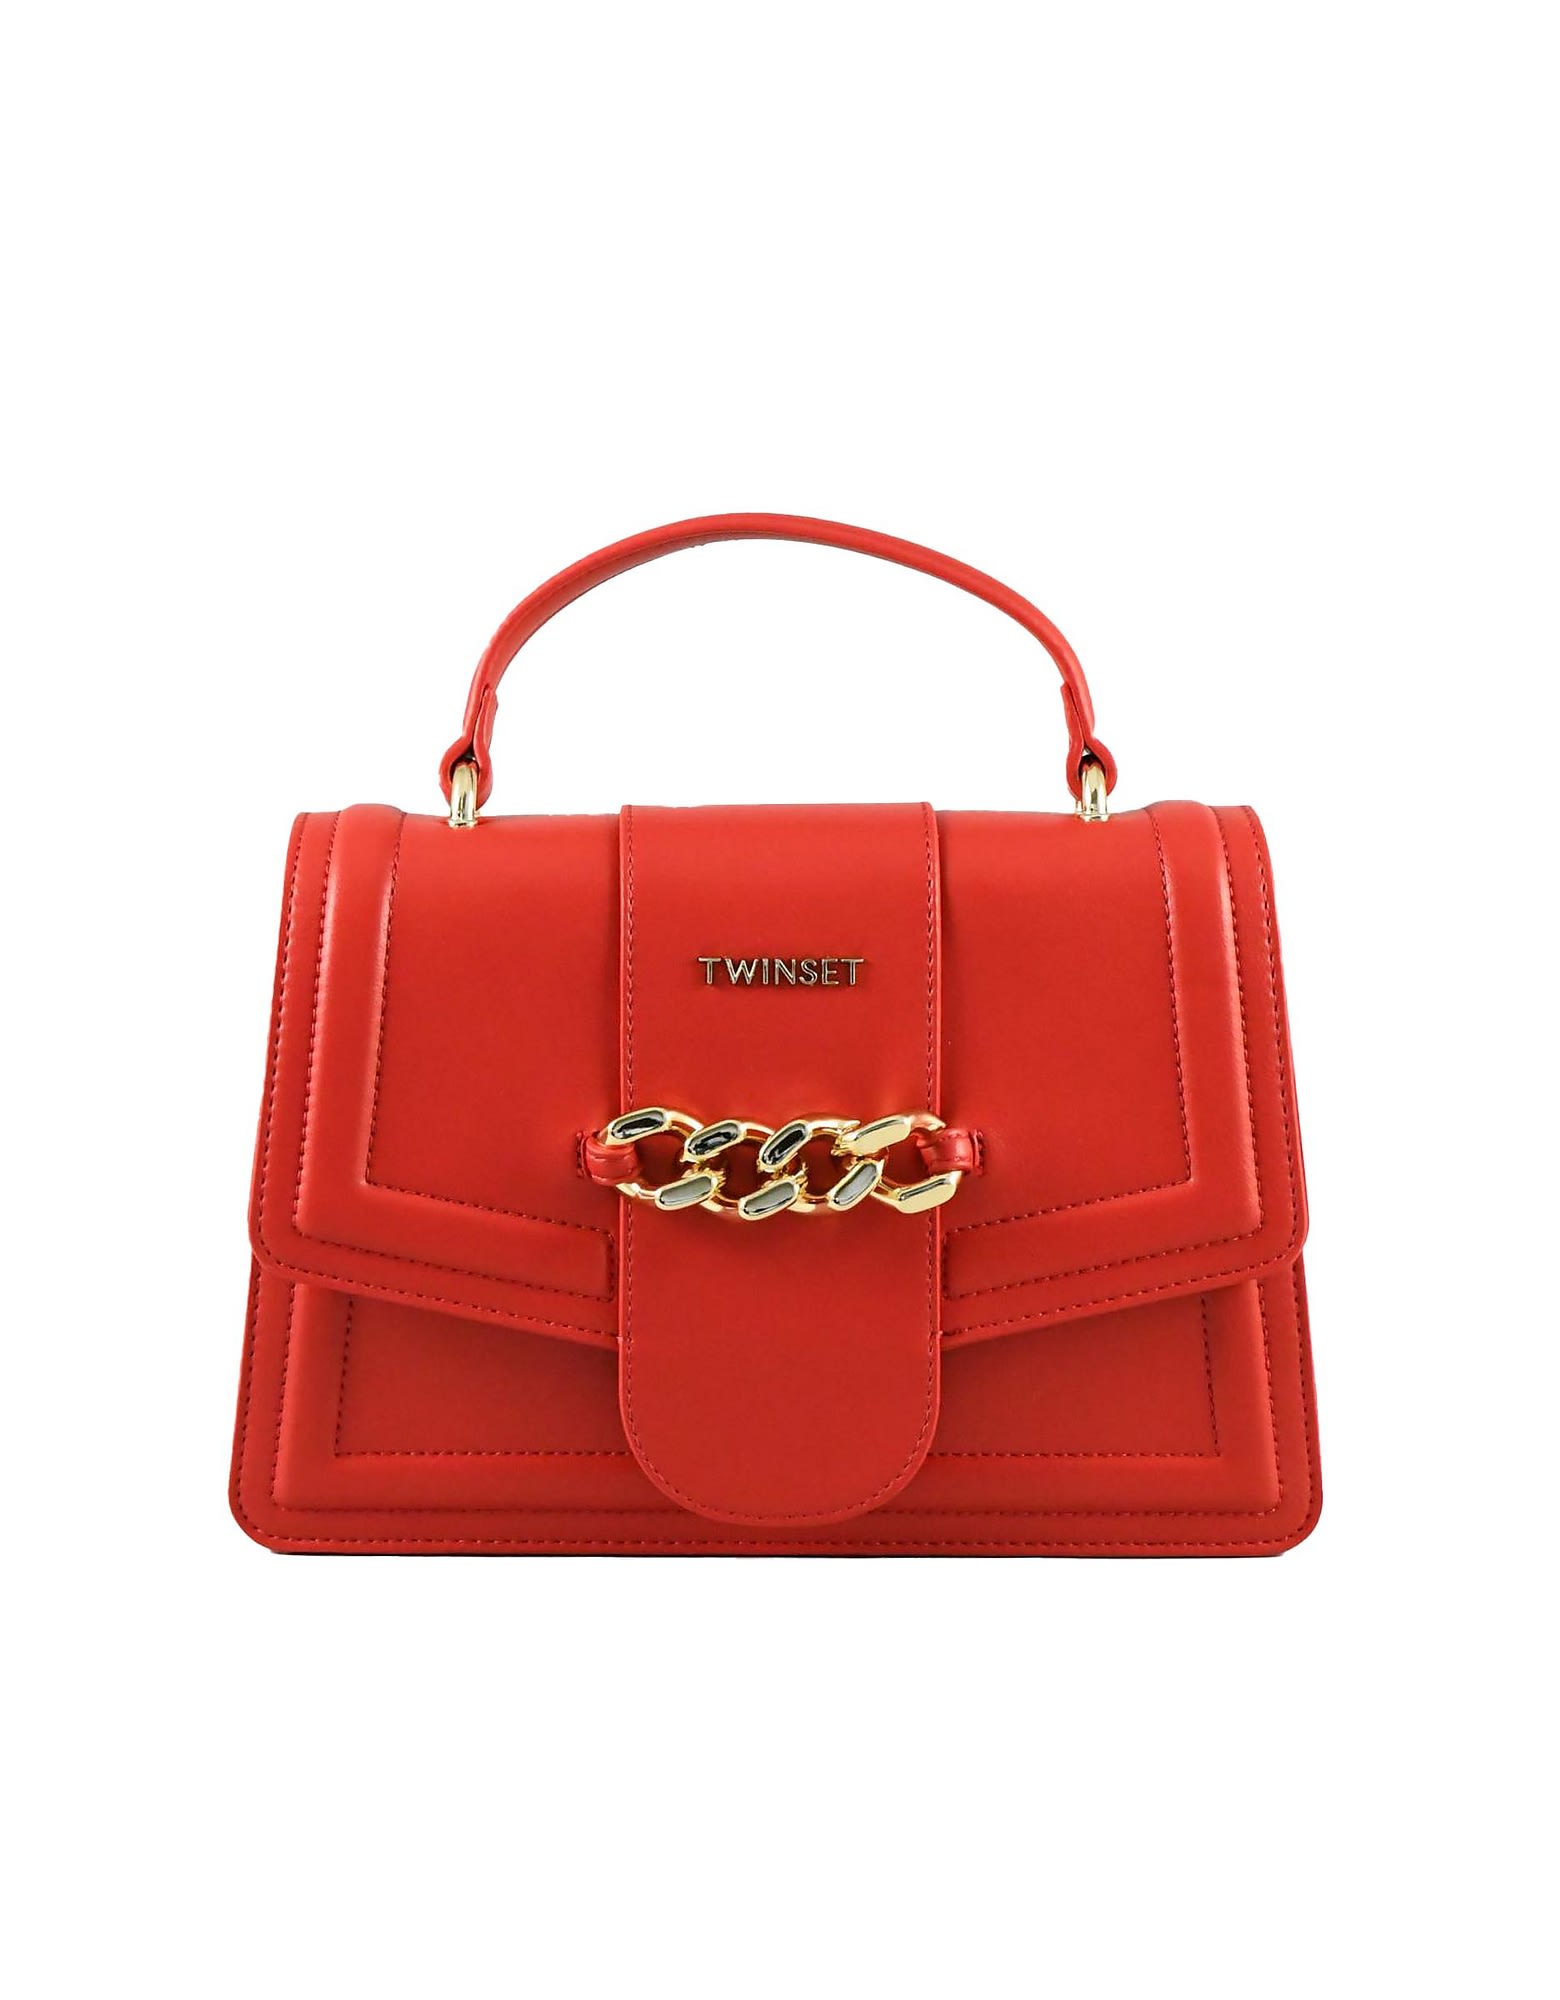 Womens Red Handbag